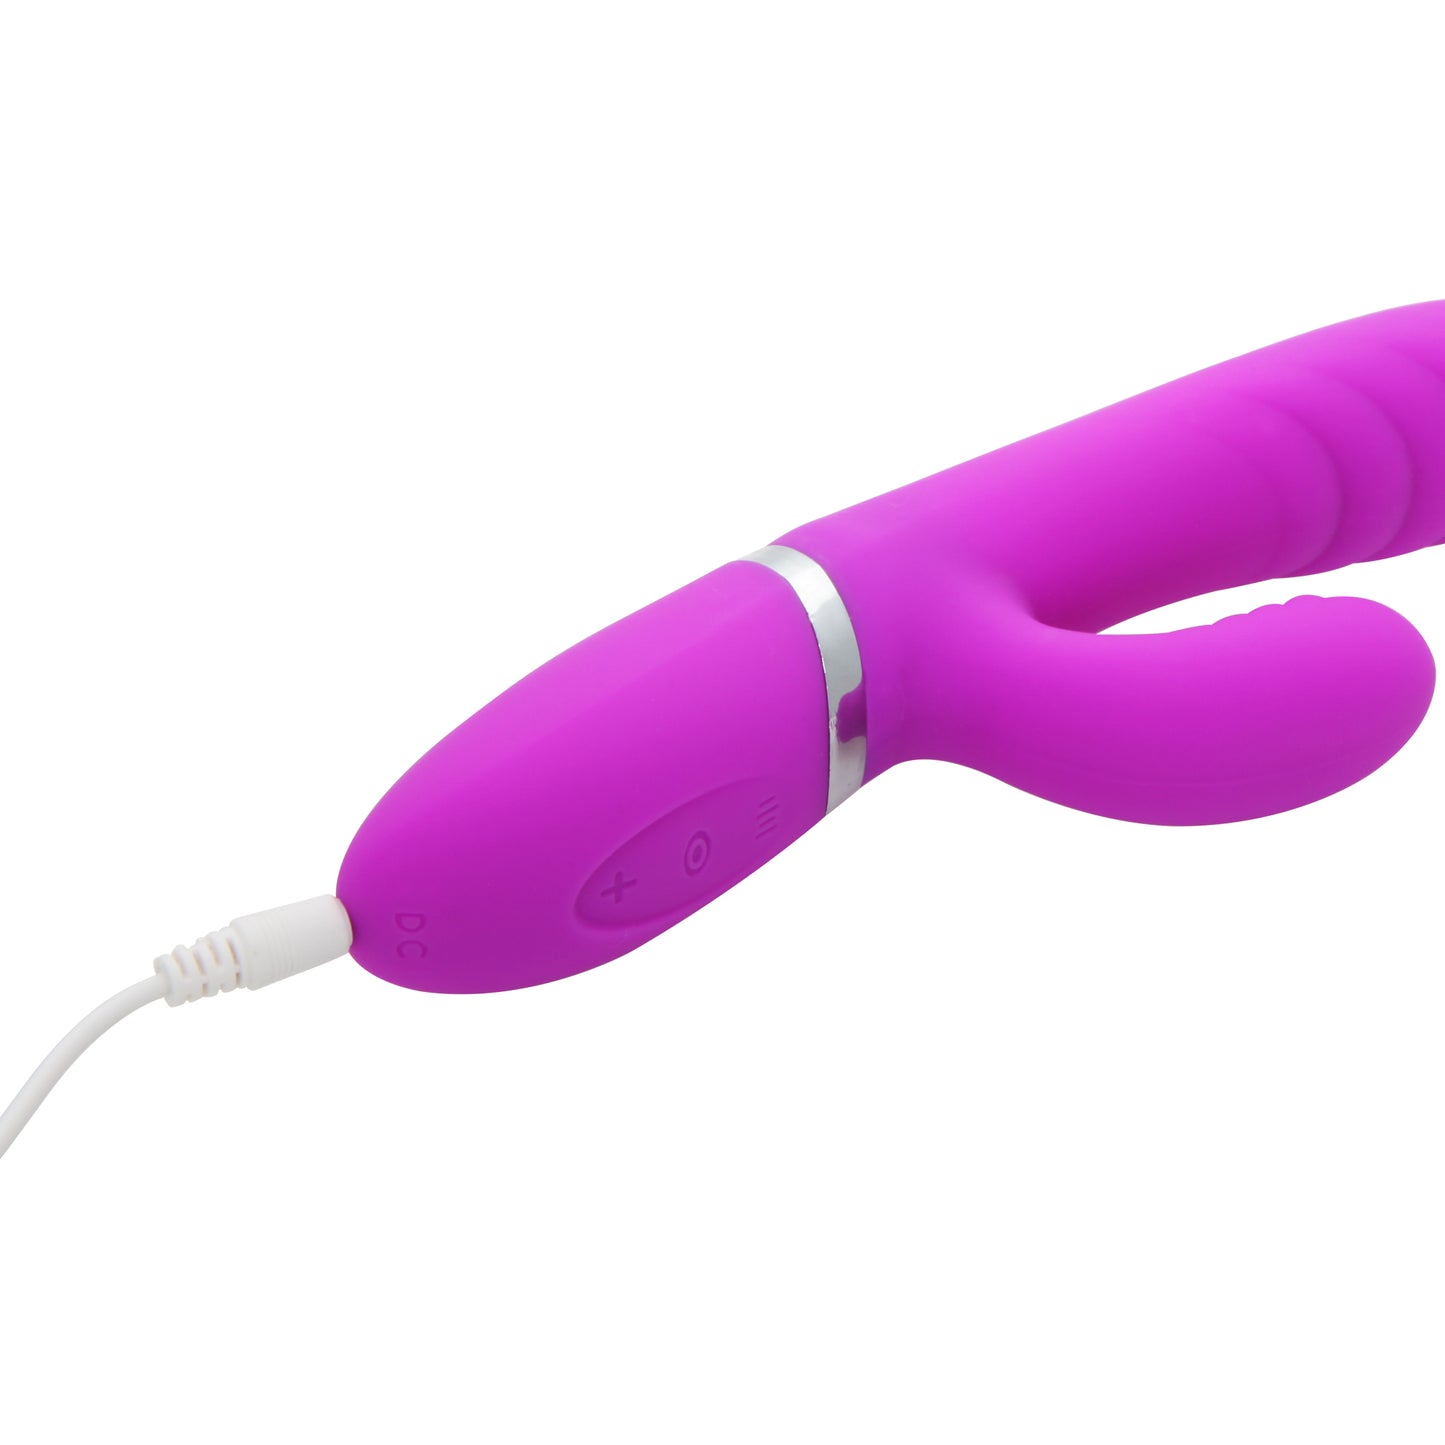 Silicone Rabbit Vibrator with Power Boost - Purpura